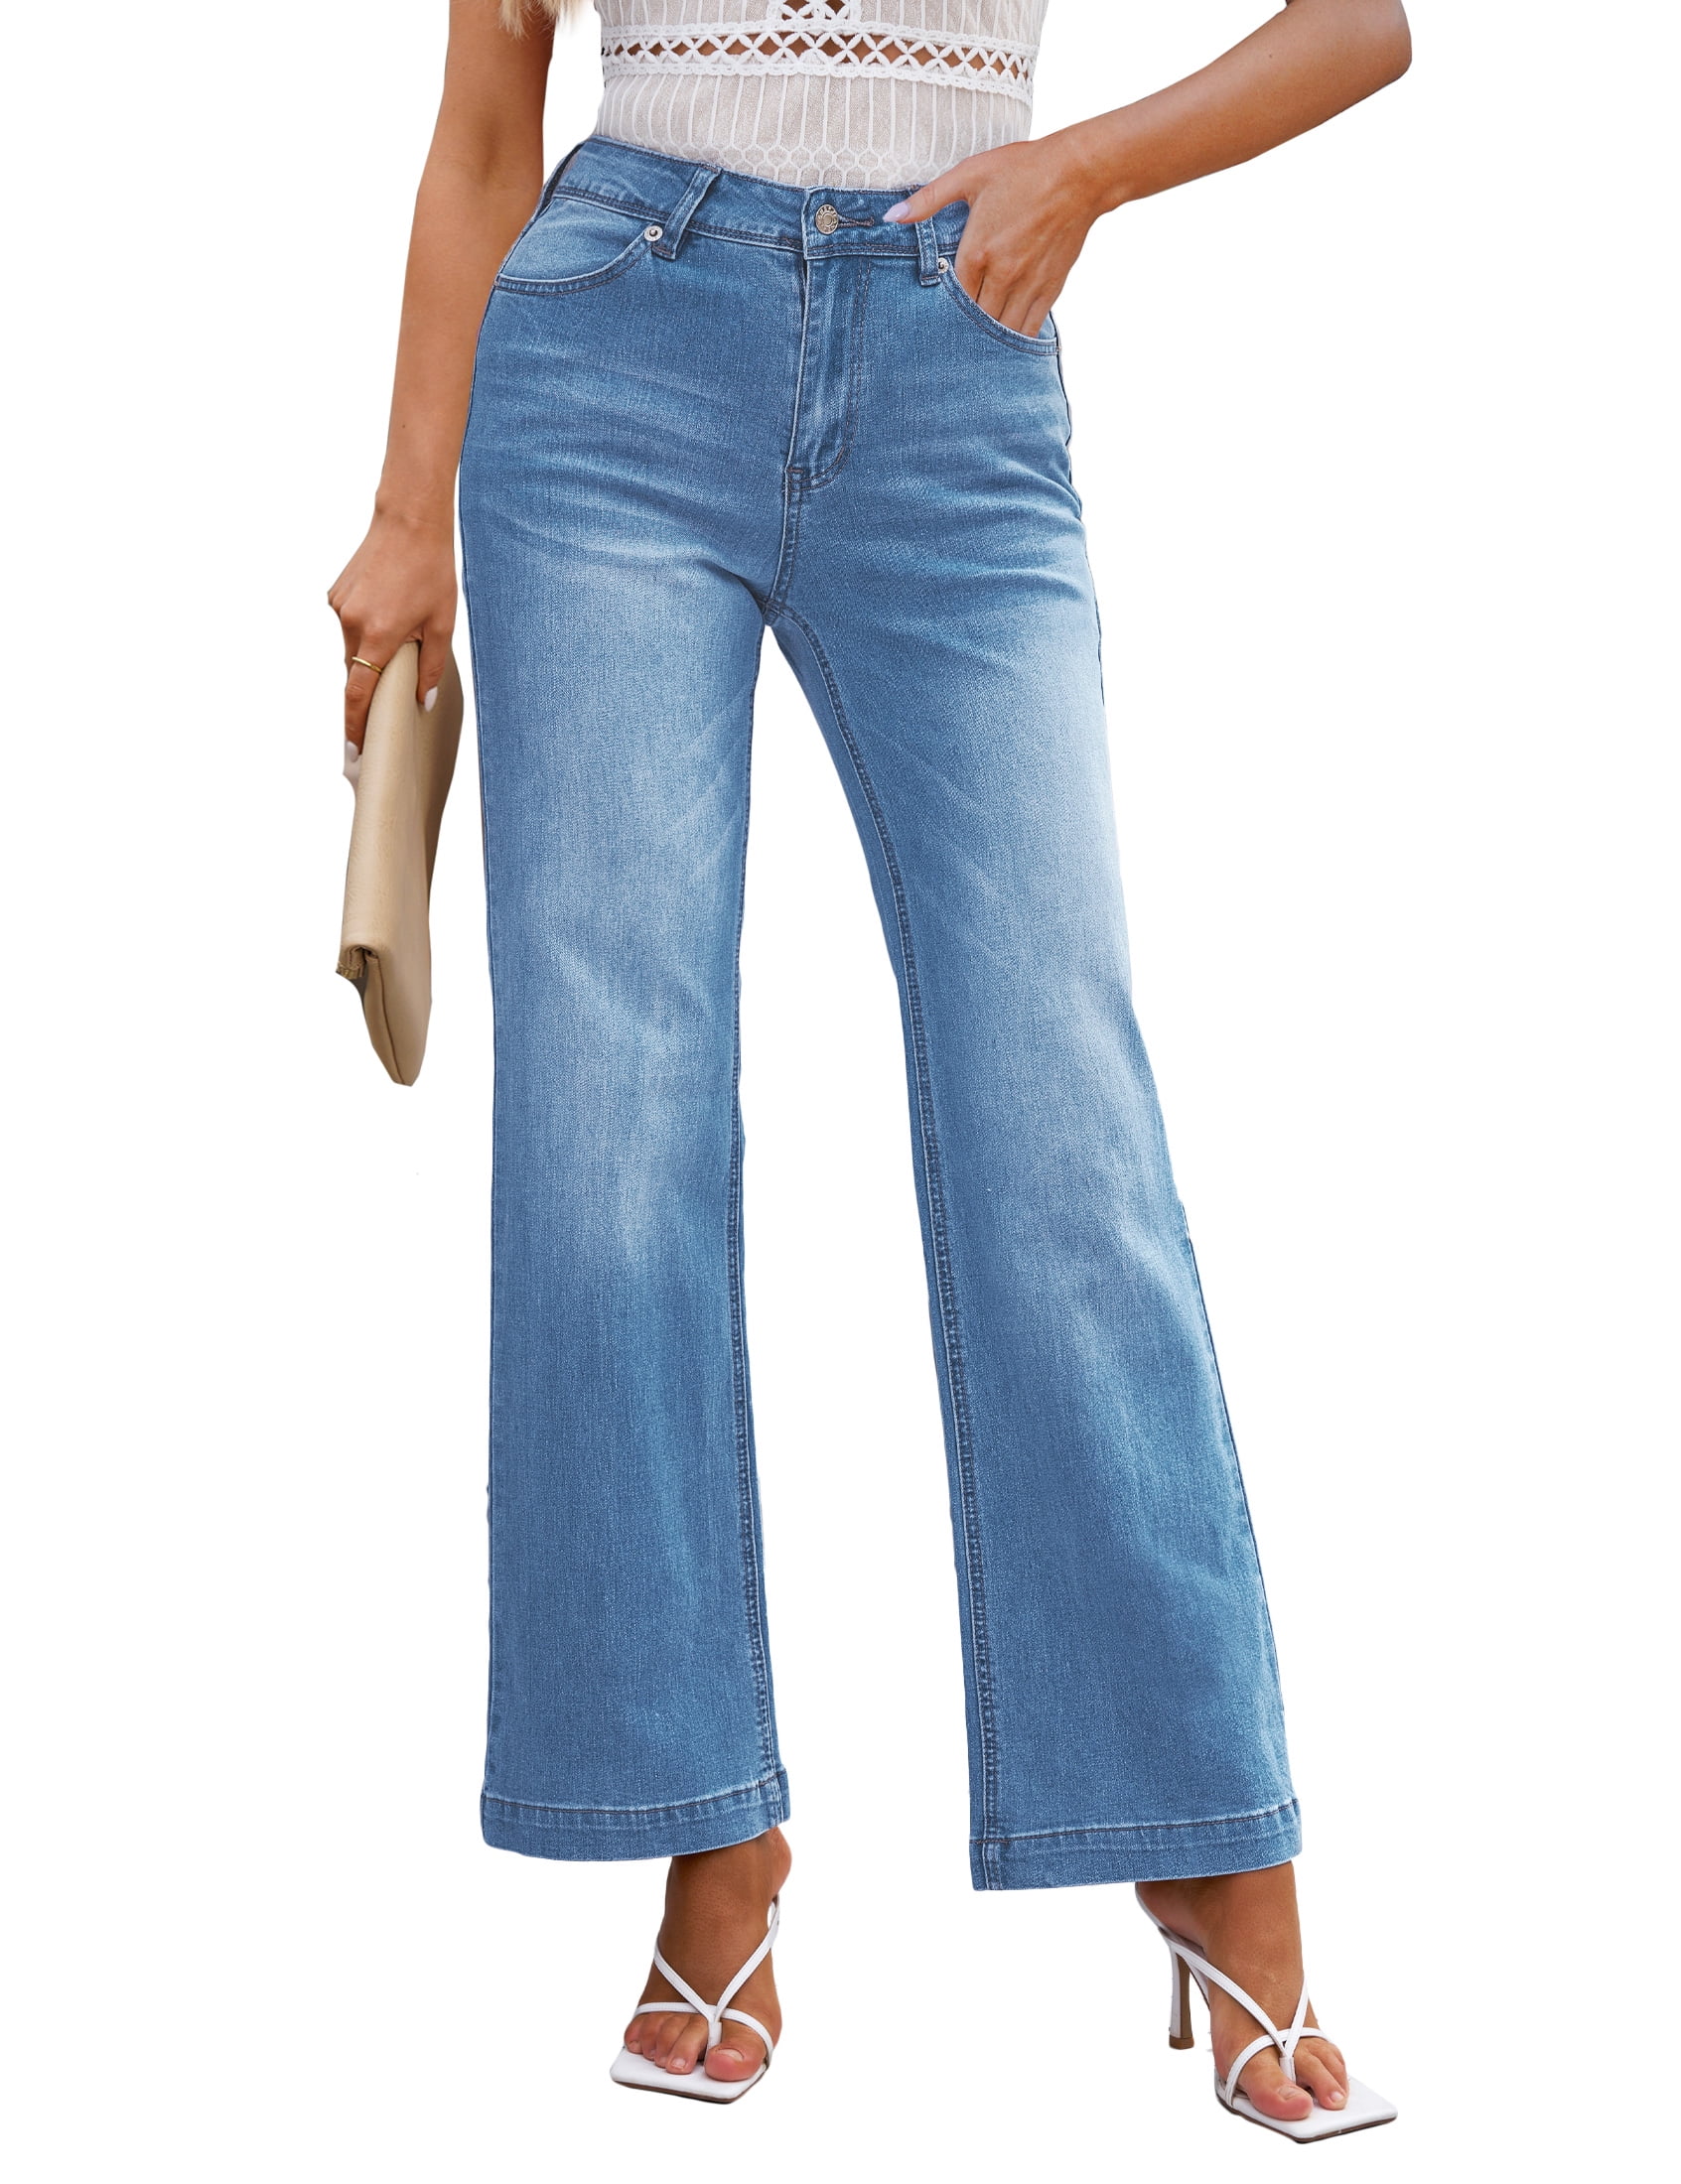 Vetinee High Waisted Wide Leg Jeans for Women Casual Summer Bootcut Jeans  Indigo Medium Blue Size 16 